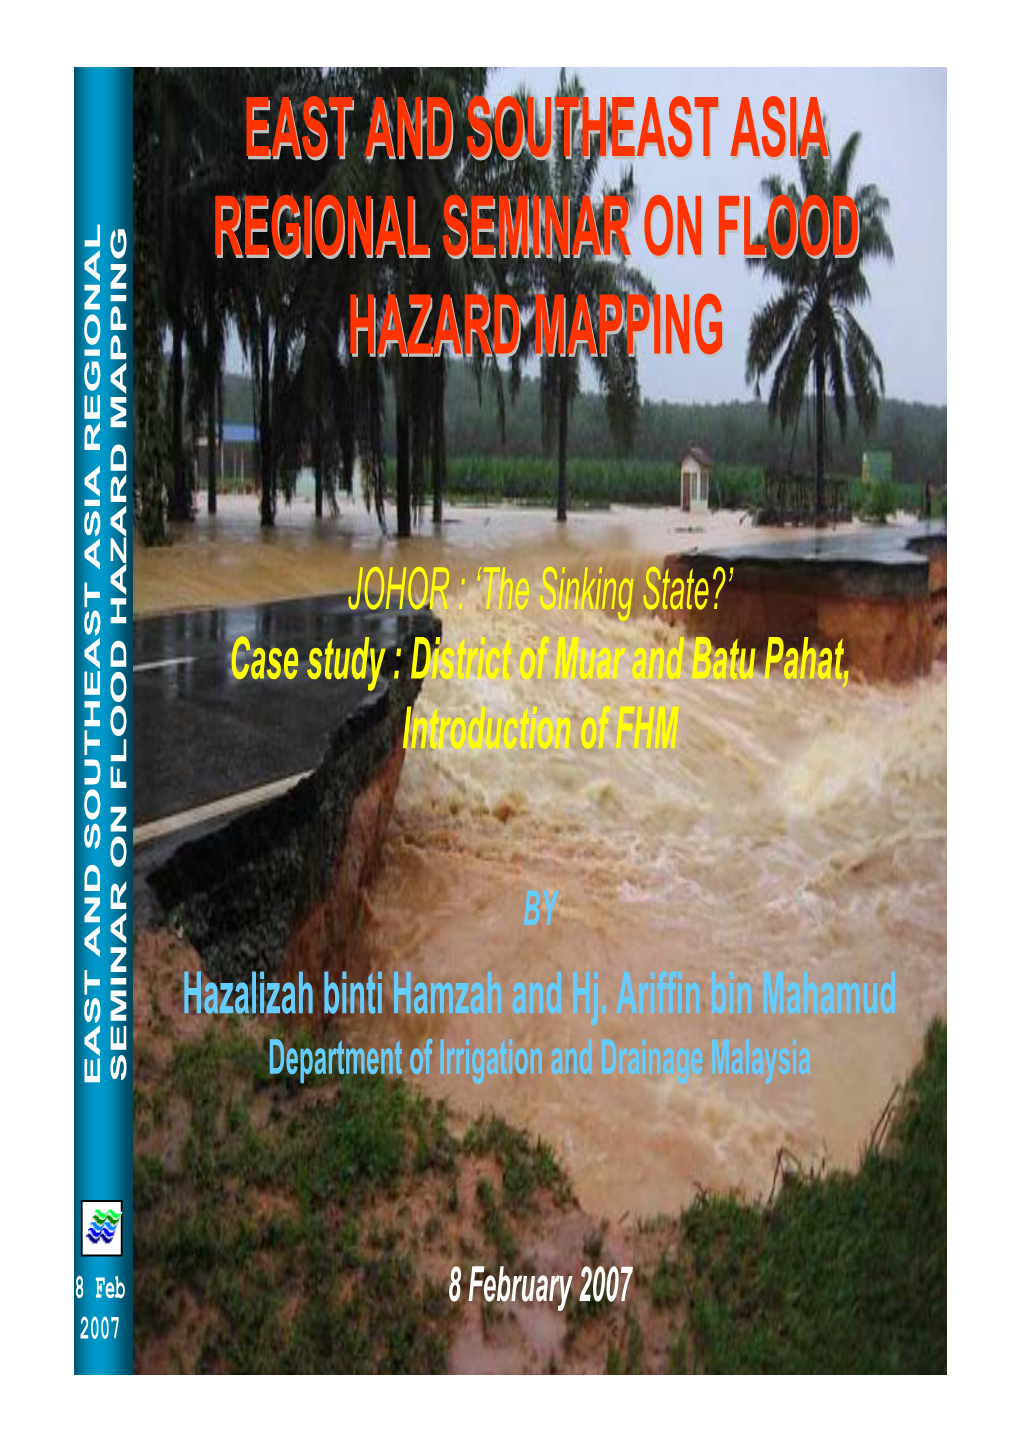 East and Southeast Asia Regional Seminar on Flood